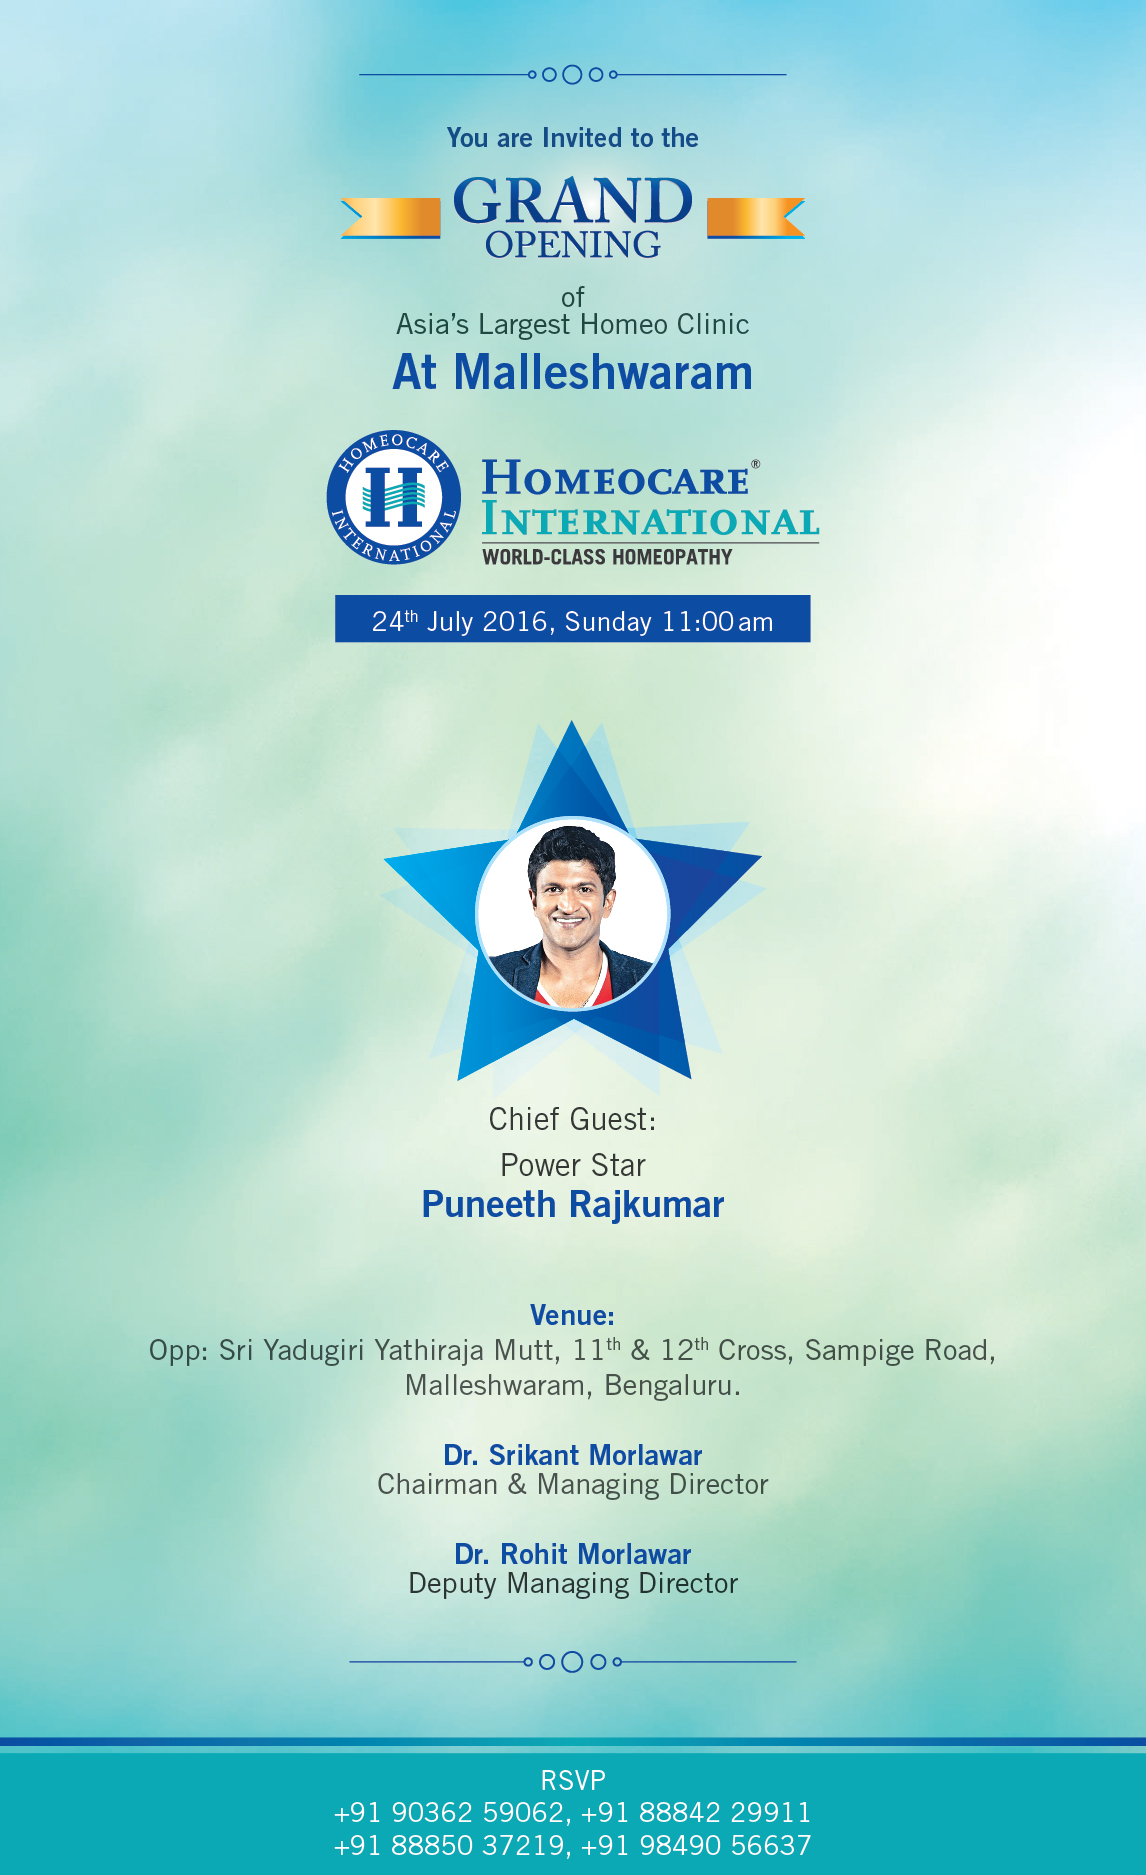 Homeocare International Malleshwaram branch inauguration